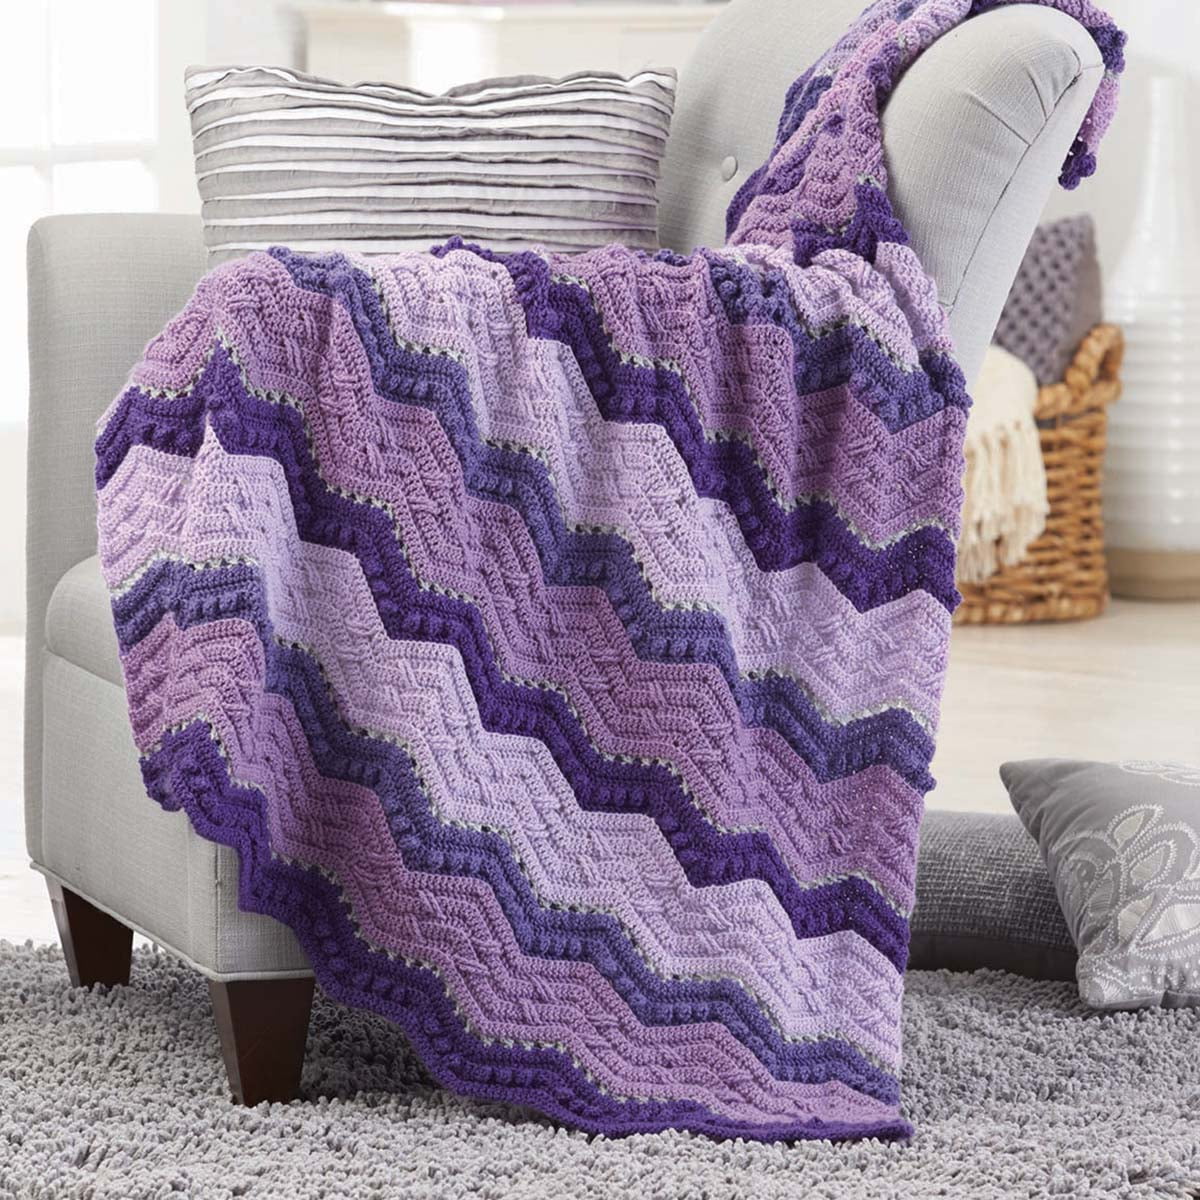 Clover 3672 Amour Crochet Hook Set, 10 sizes 